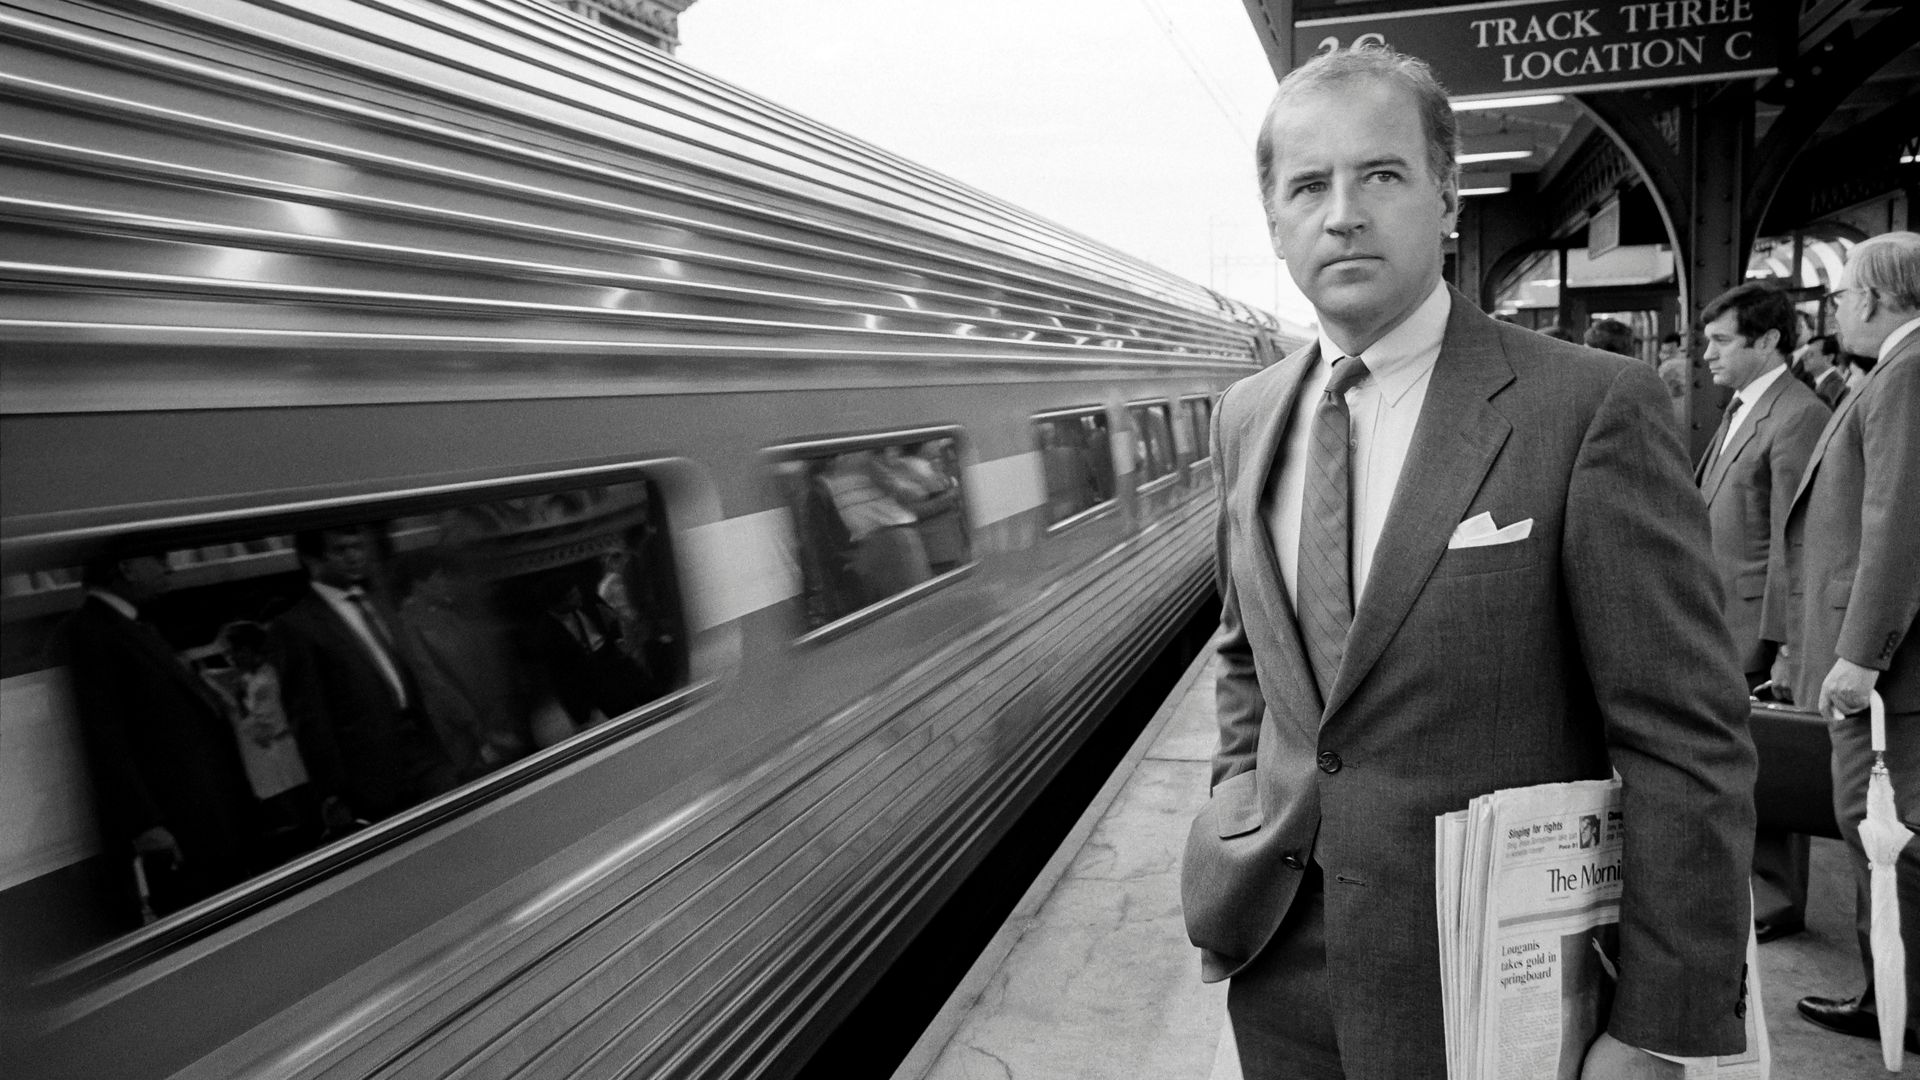 Joe Biden stands on a platform as a train passes by him.